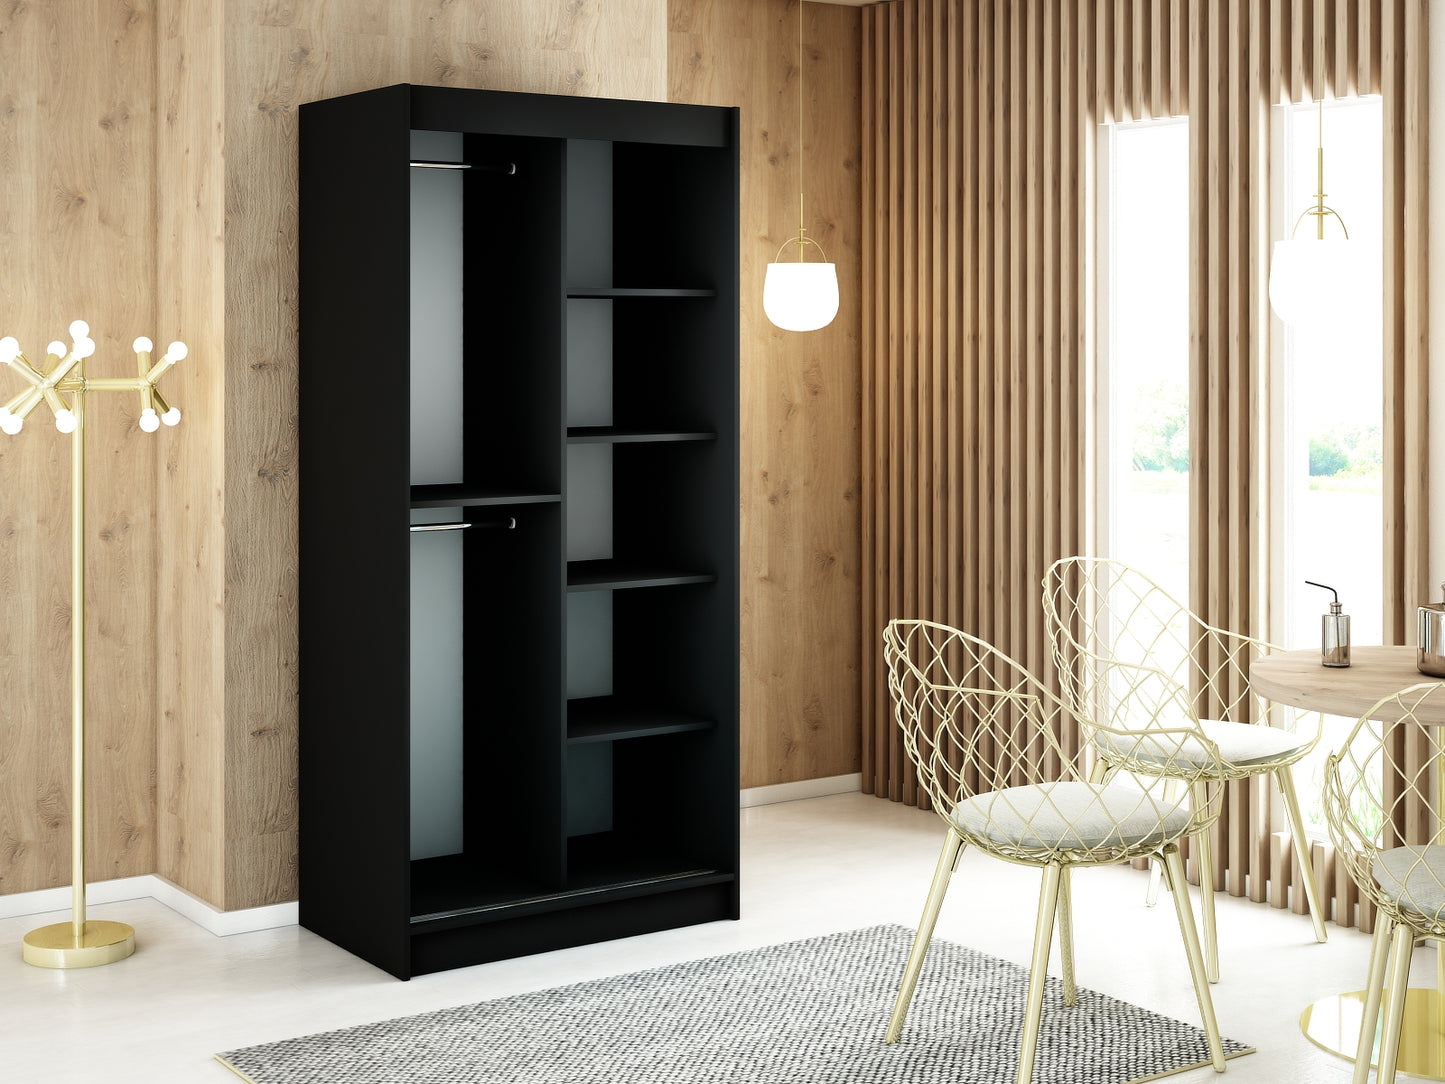 MALI V2 - Sliding Wardrobe Black with Mirror Gold Details Shelves Rails Drawers Optional >100cm<